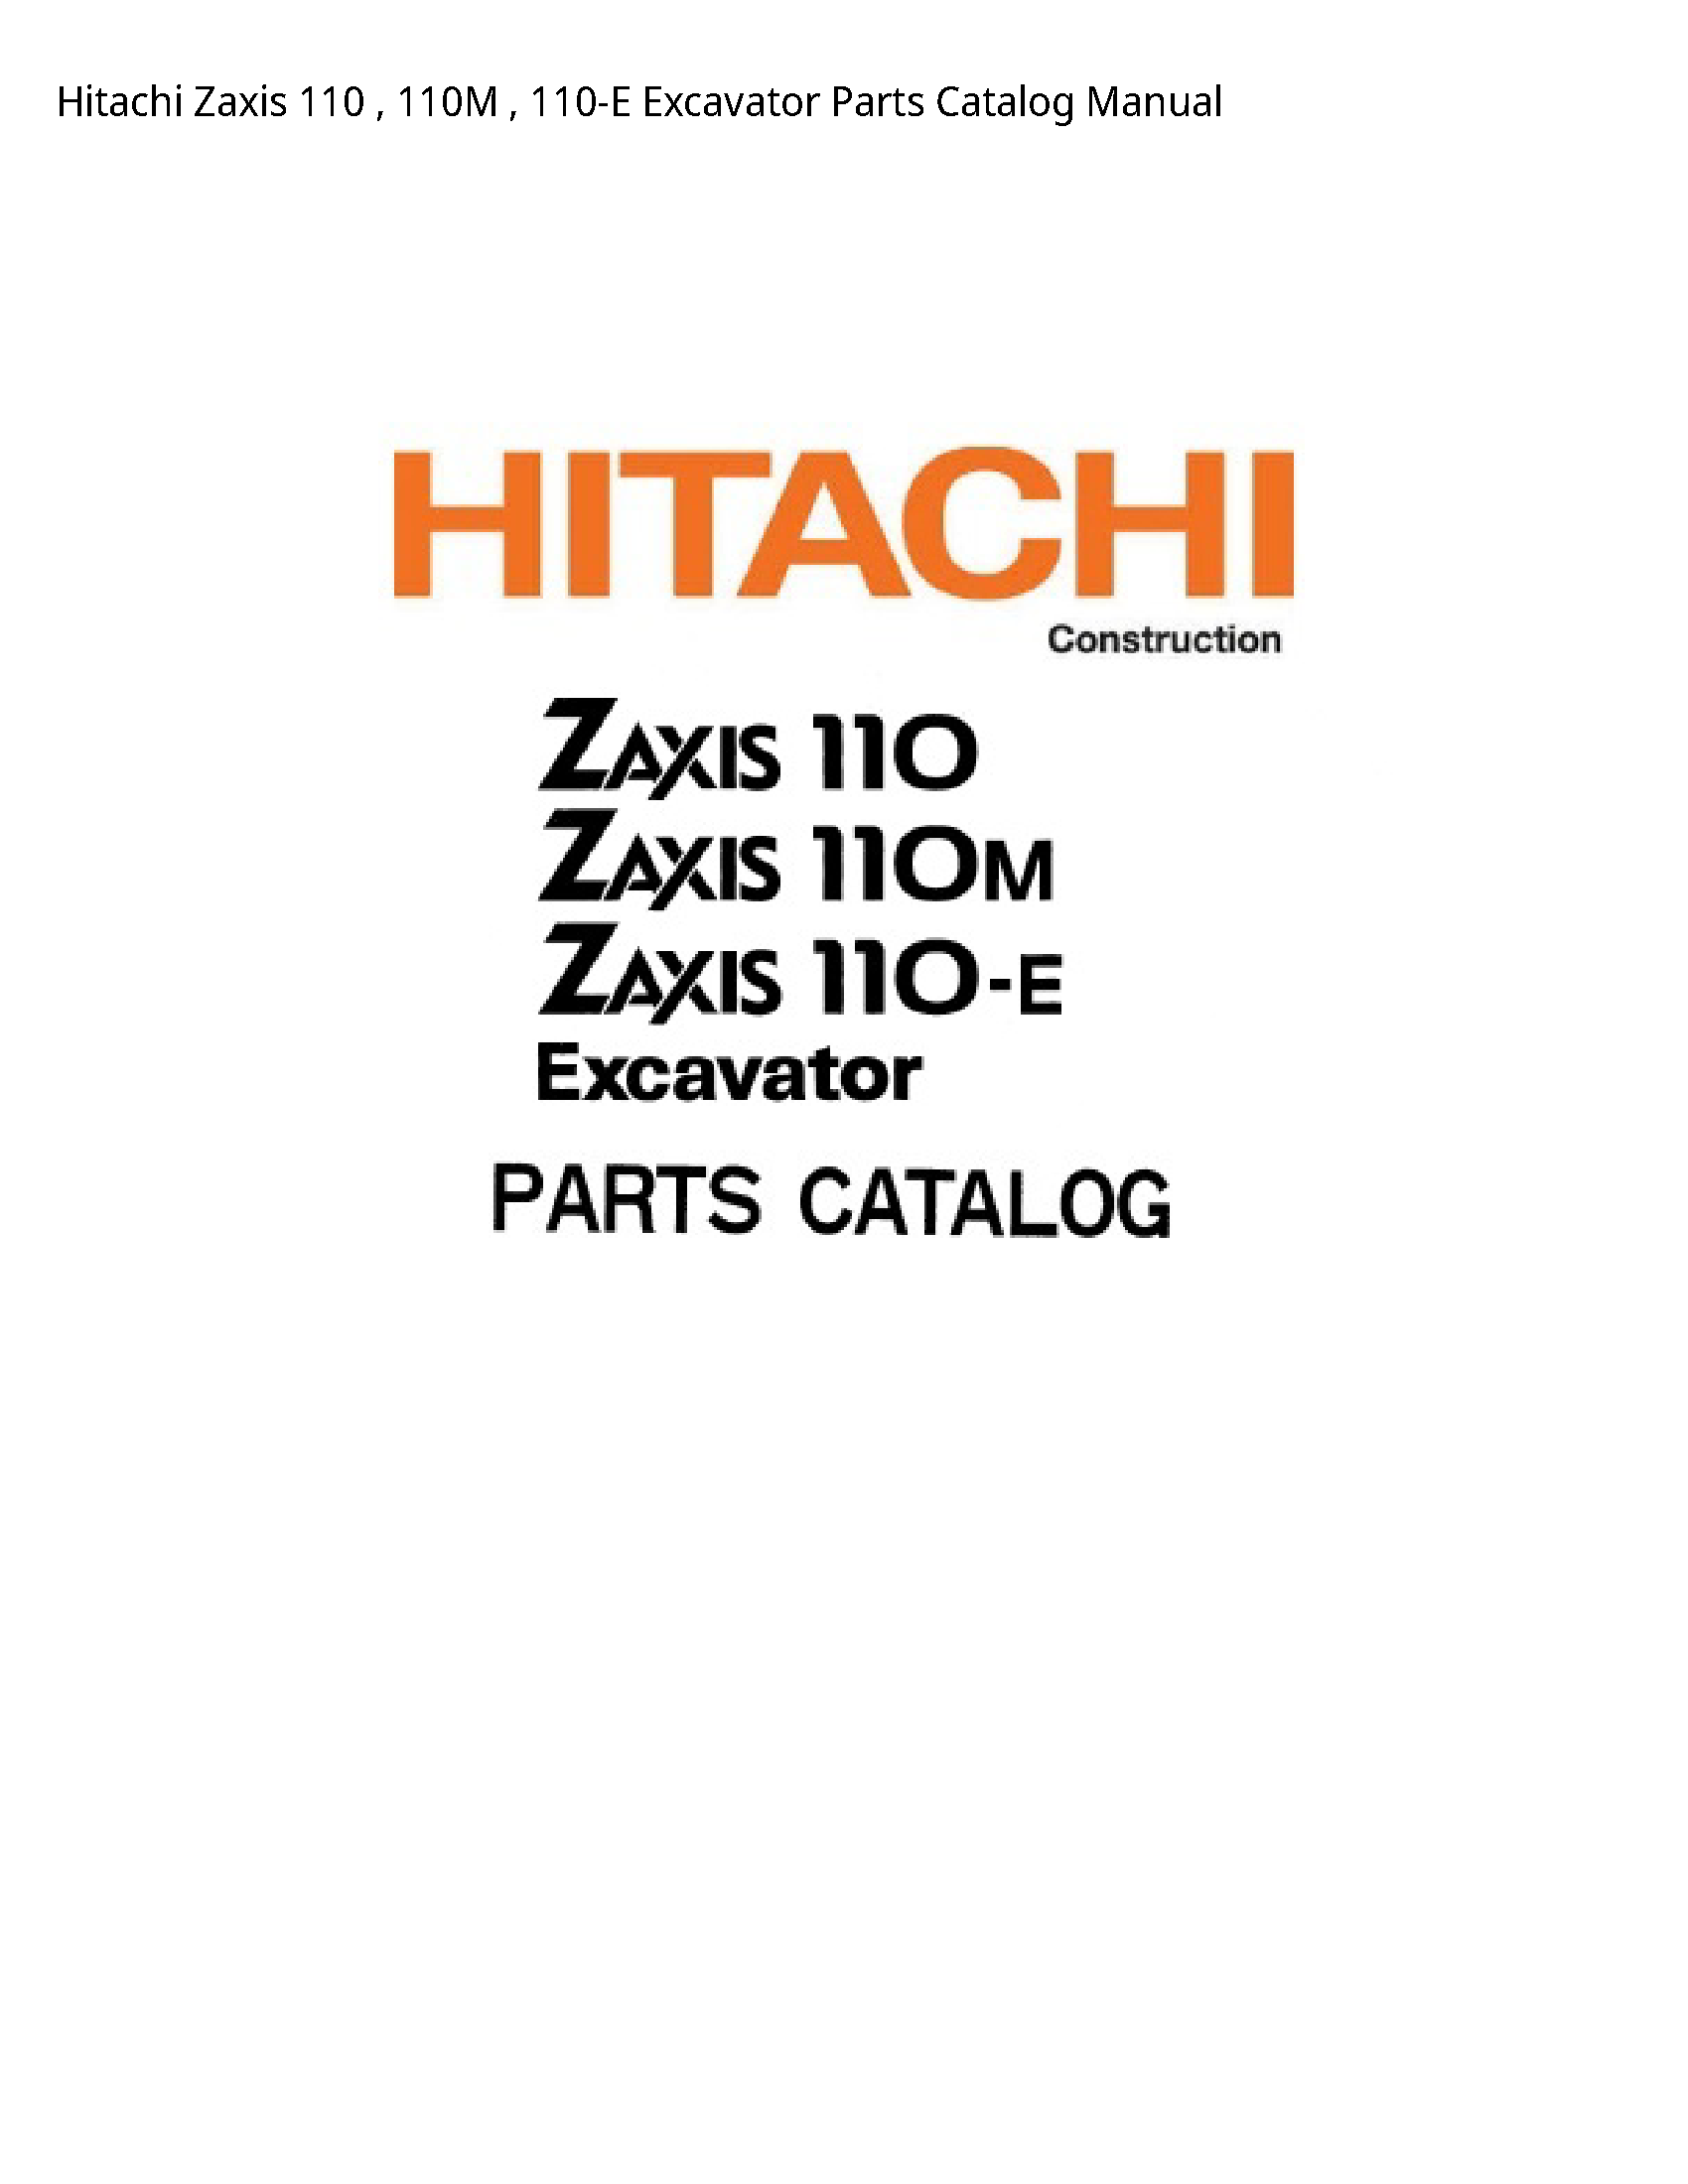 Hitachi 110 Zaxis Excavator Parts Catalog manual